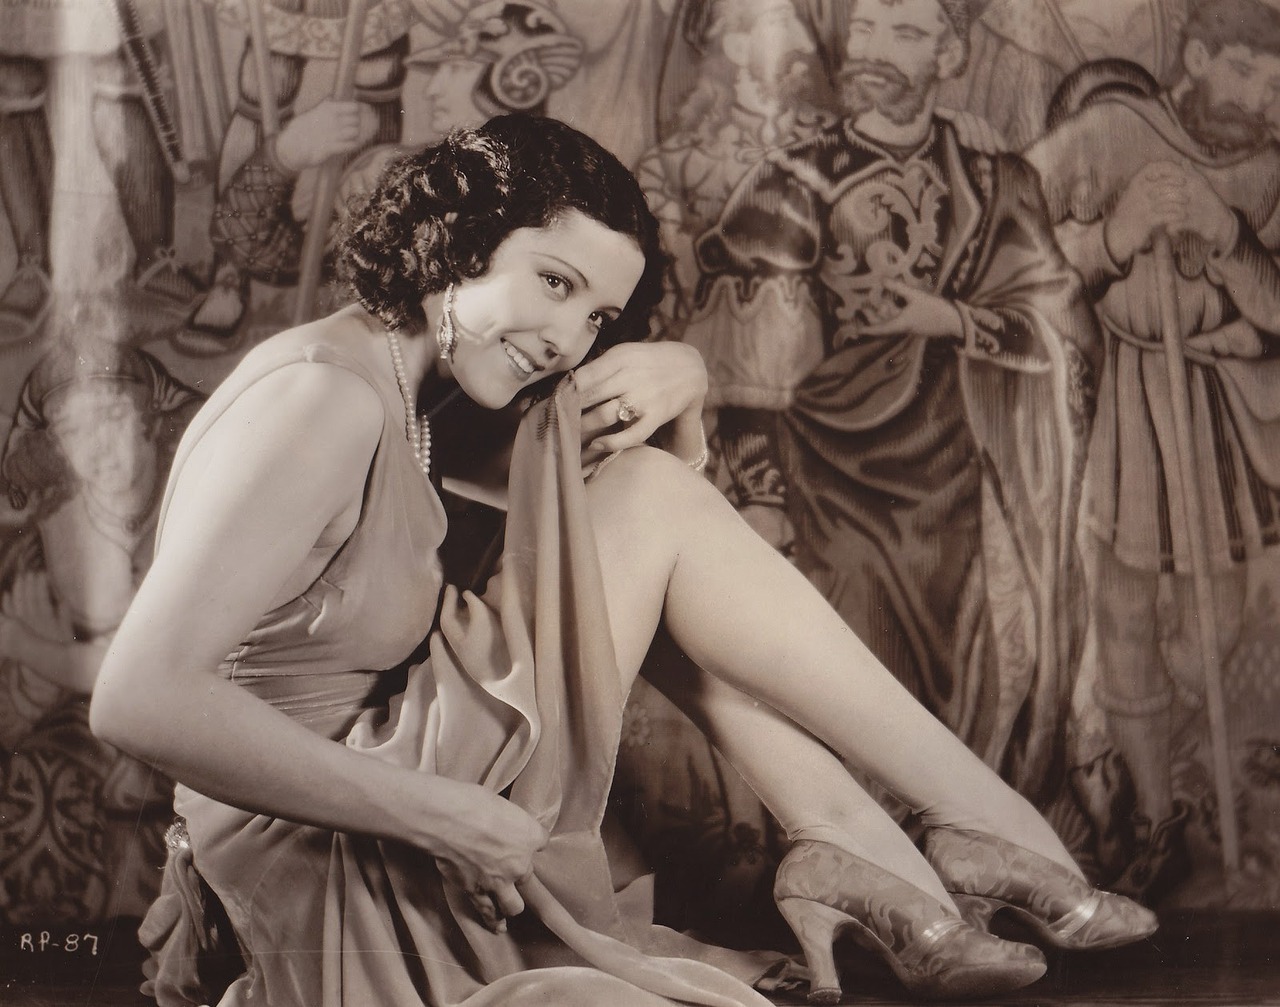 olga-4711:
“ Raquel Torres, here 1931, was a Mexican-born American film actress. ”